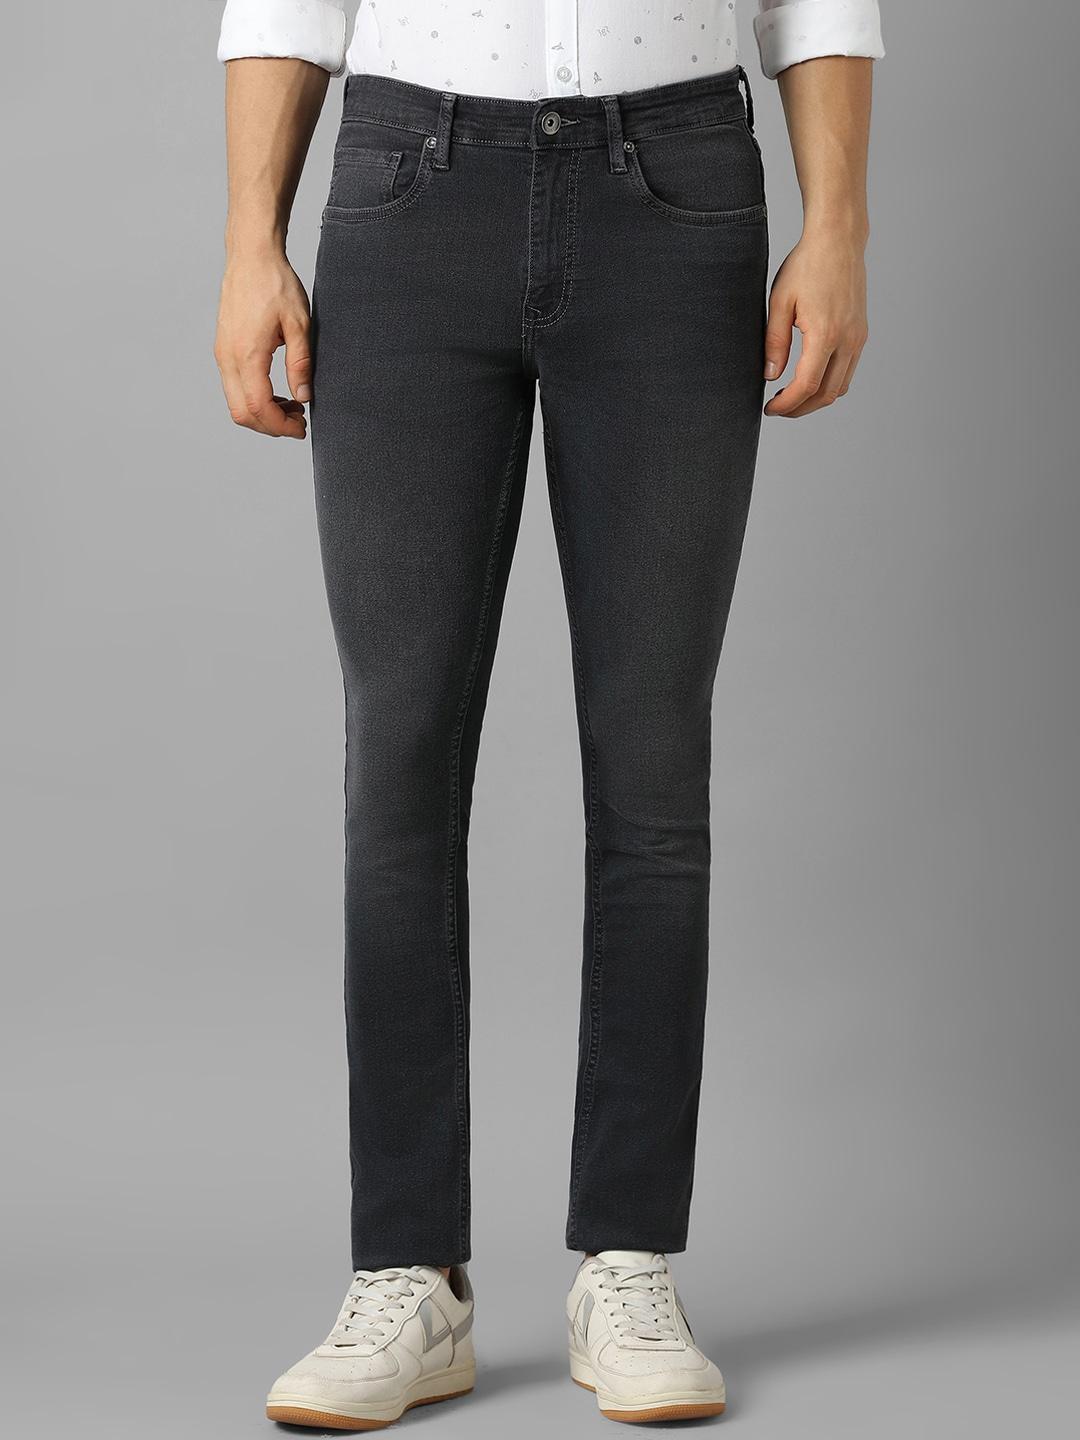 Louis Philippe Jeans Men Slim Fit Clean Look Mid-Rise Jeans